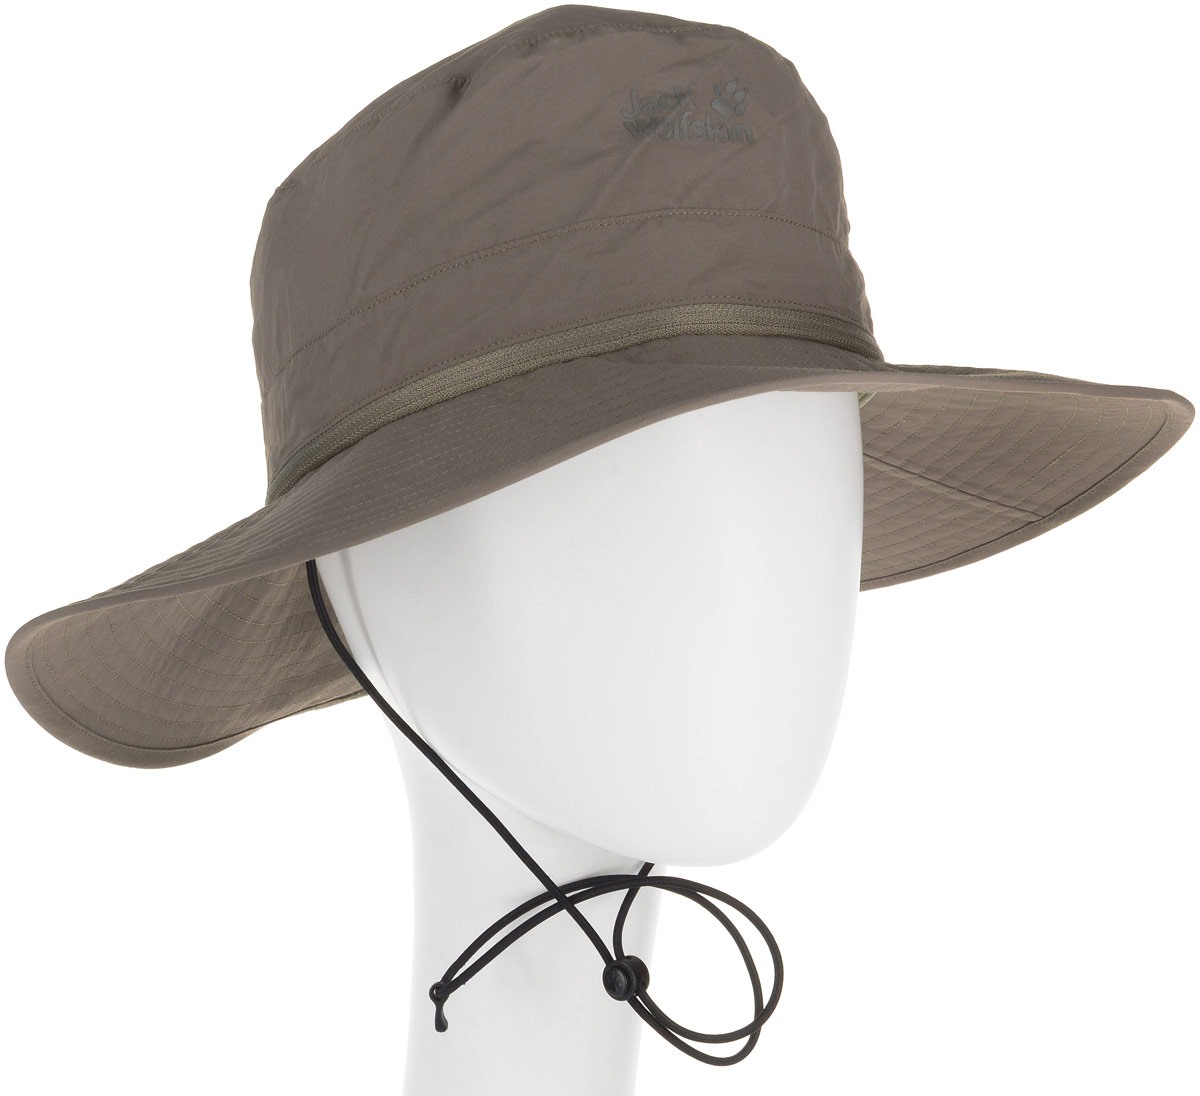 Панама Jack Wolfskin Supplex Mosquito Hat, цвет: коричневый. 1906751-5116. Размер M (54/57)